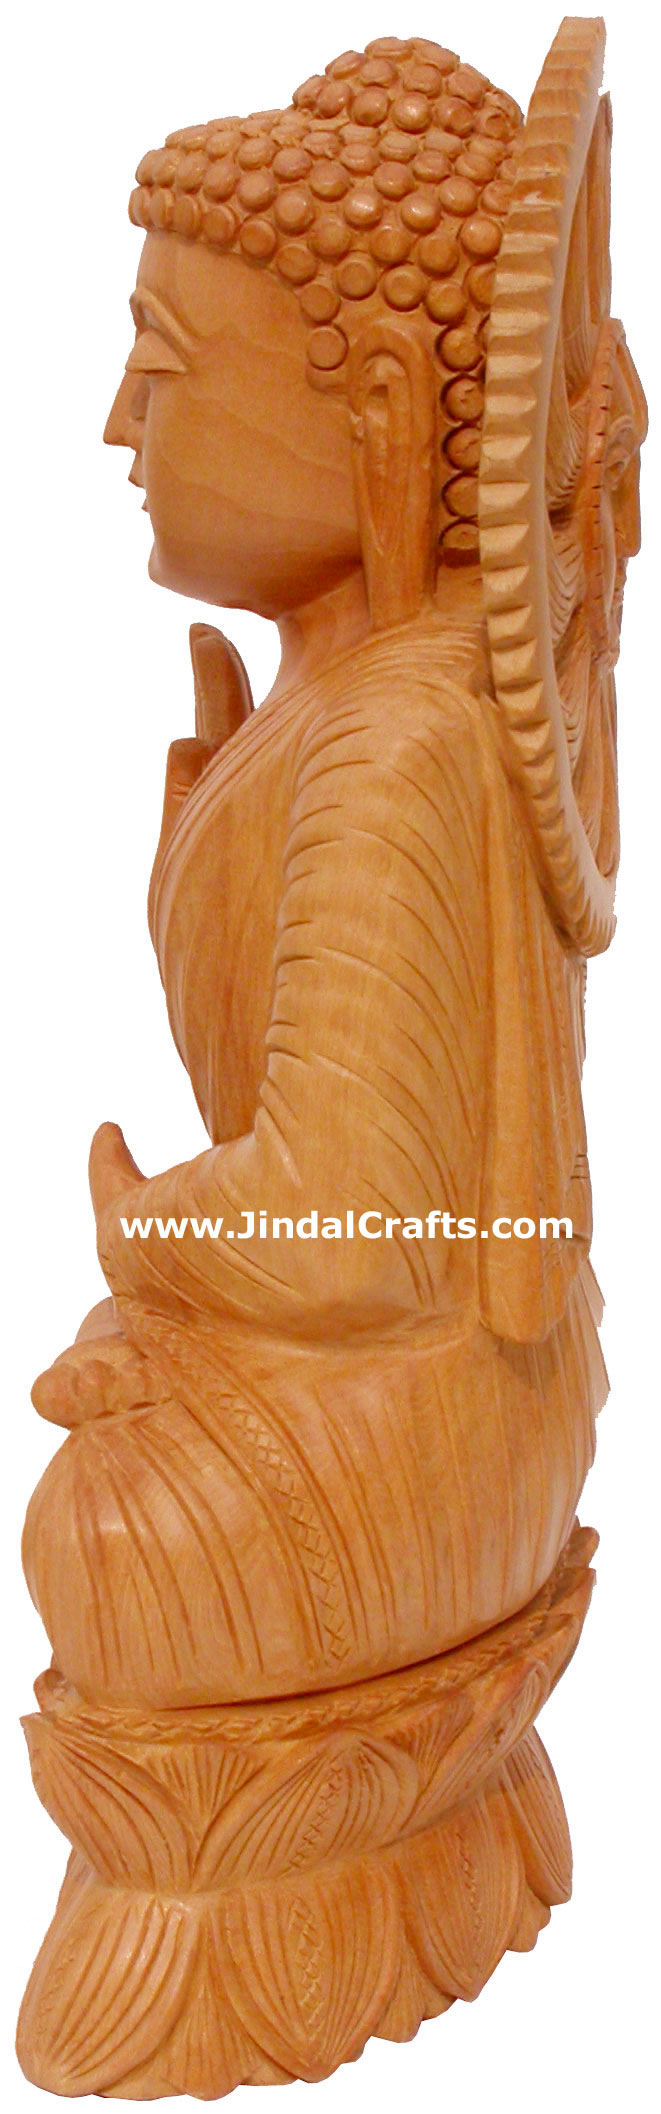 Wood Hand Carved Gautam Buddha Figurine India Carving Art Buddhism Handicrafts